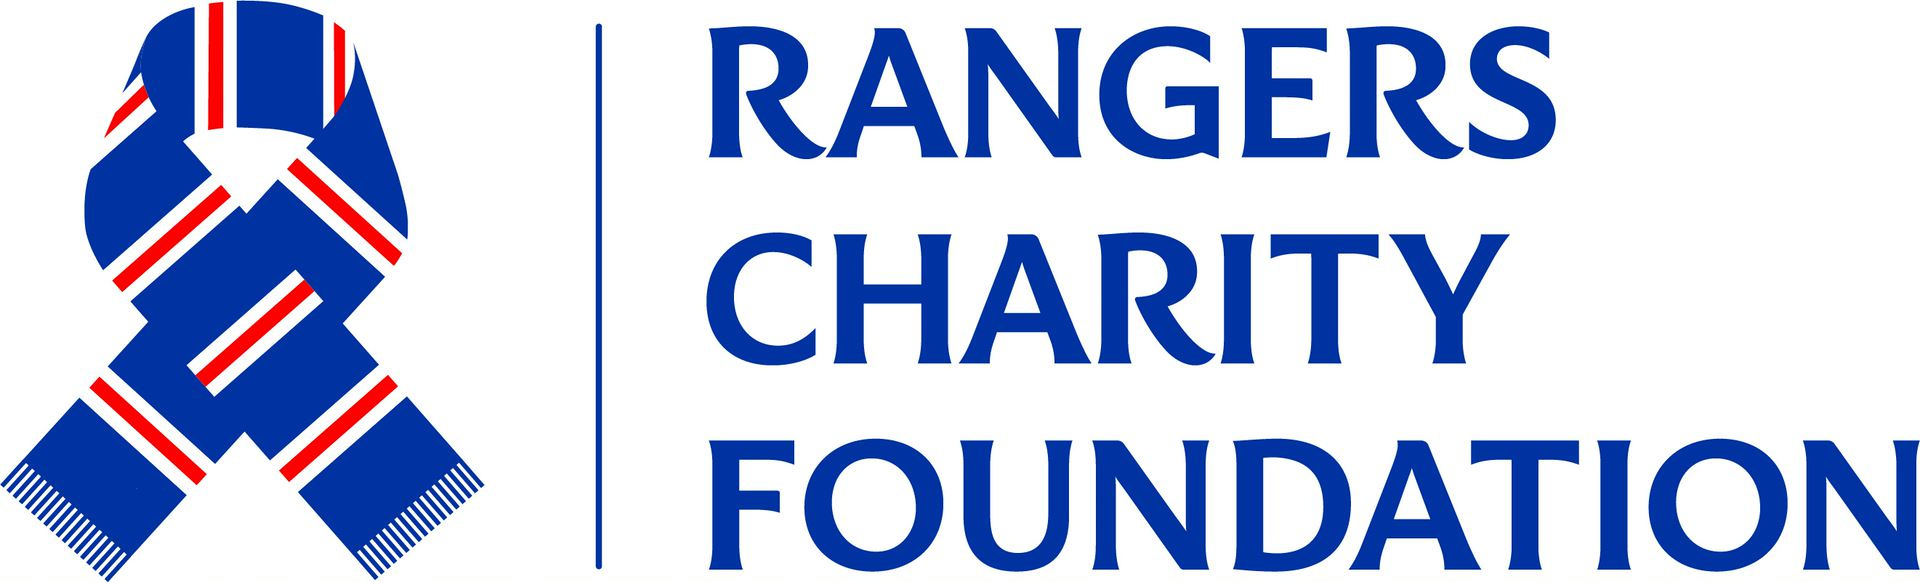 Rangers Charity Foundation